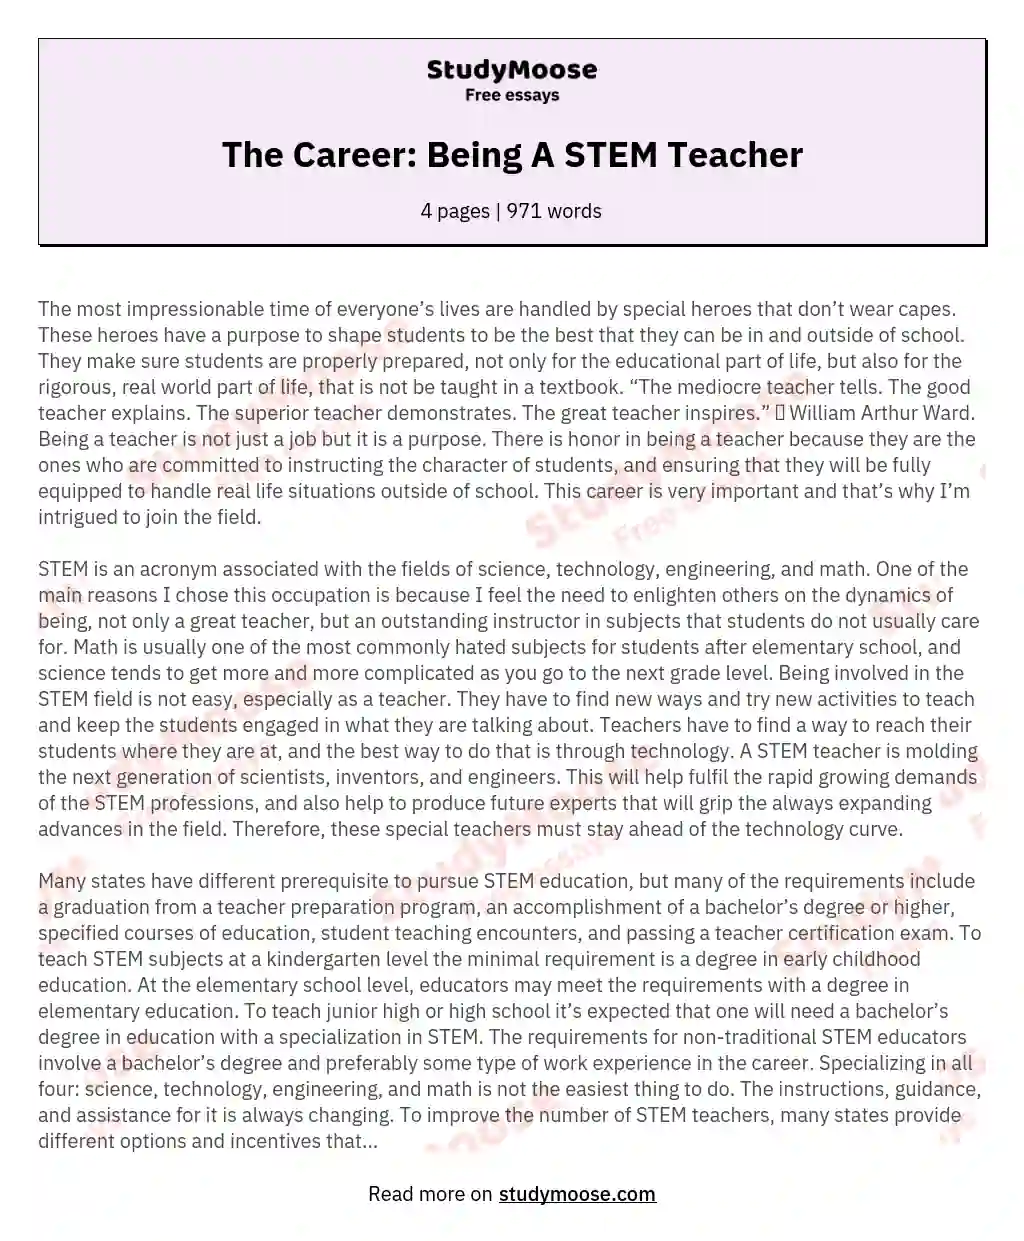 The Career: Being A STEM Teacher essay